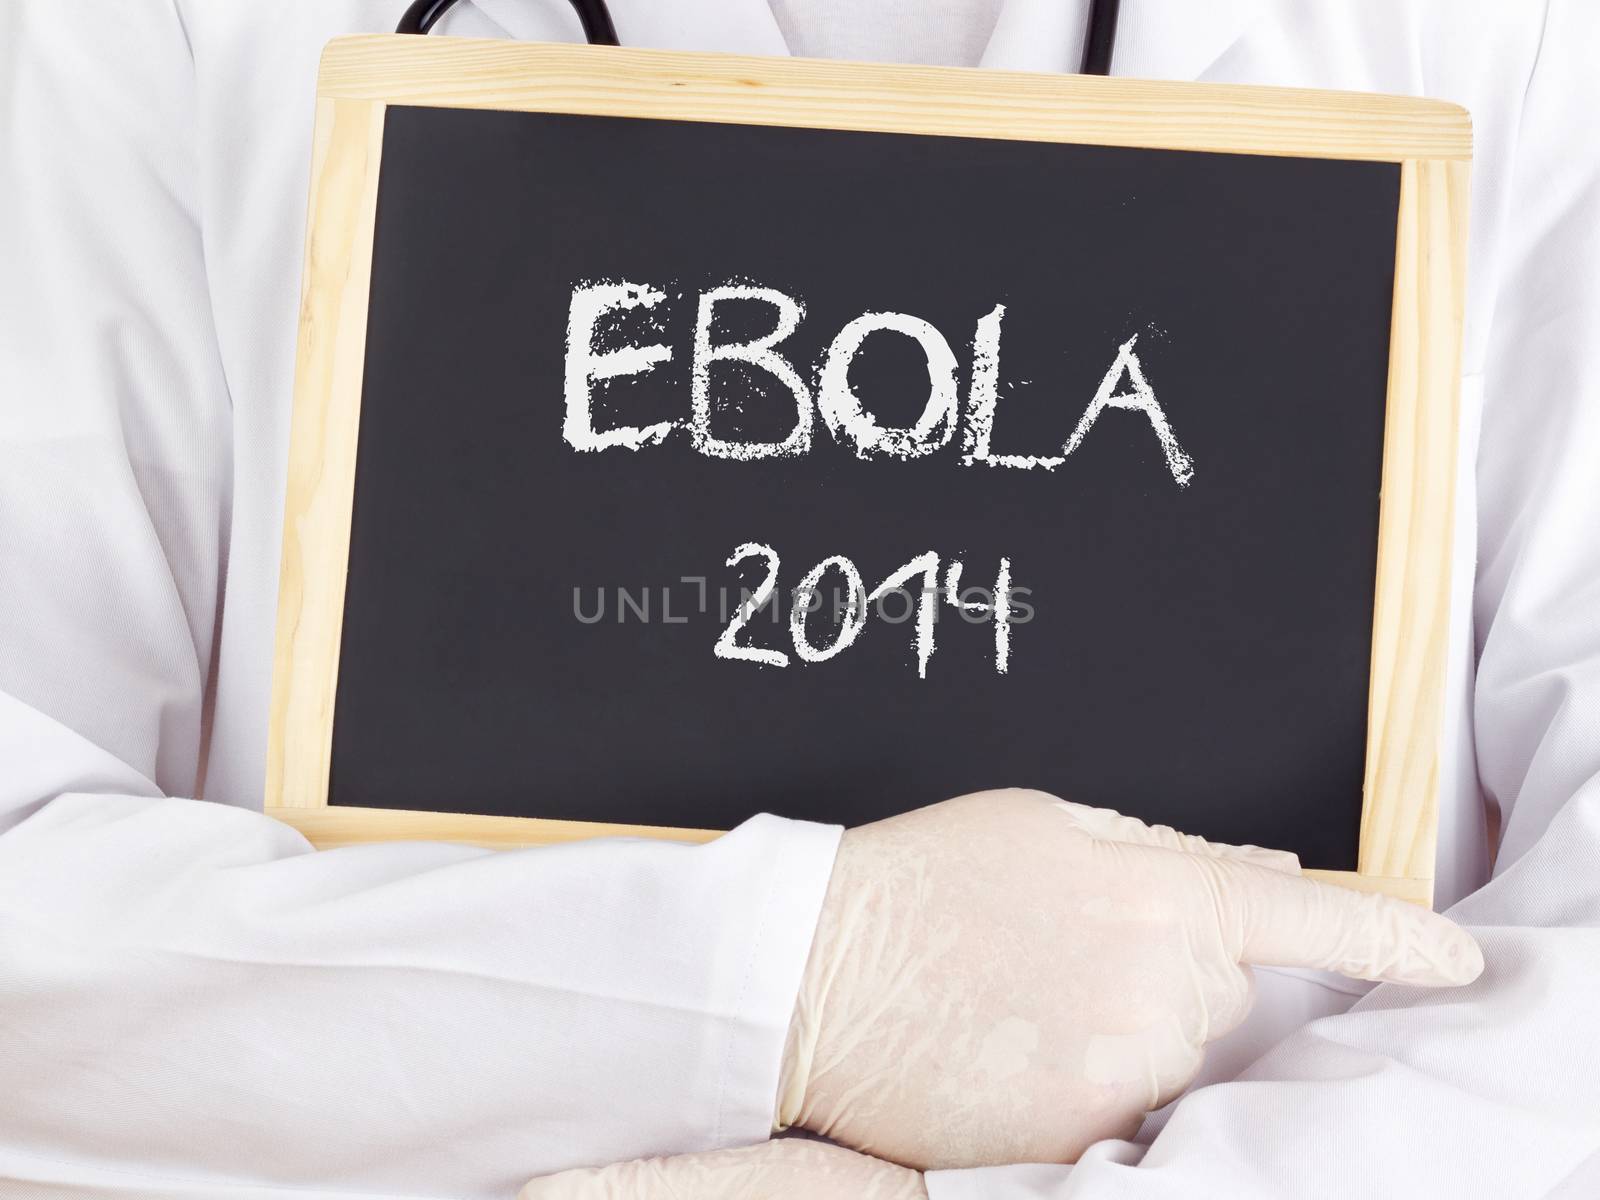 Doctor shows information: Ebola 2014